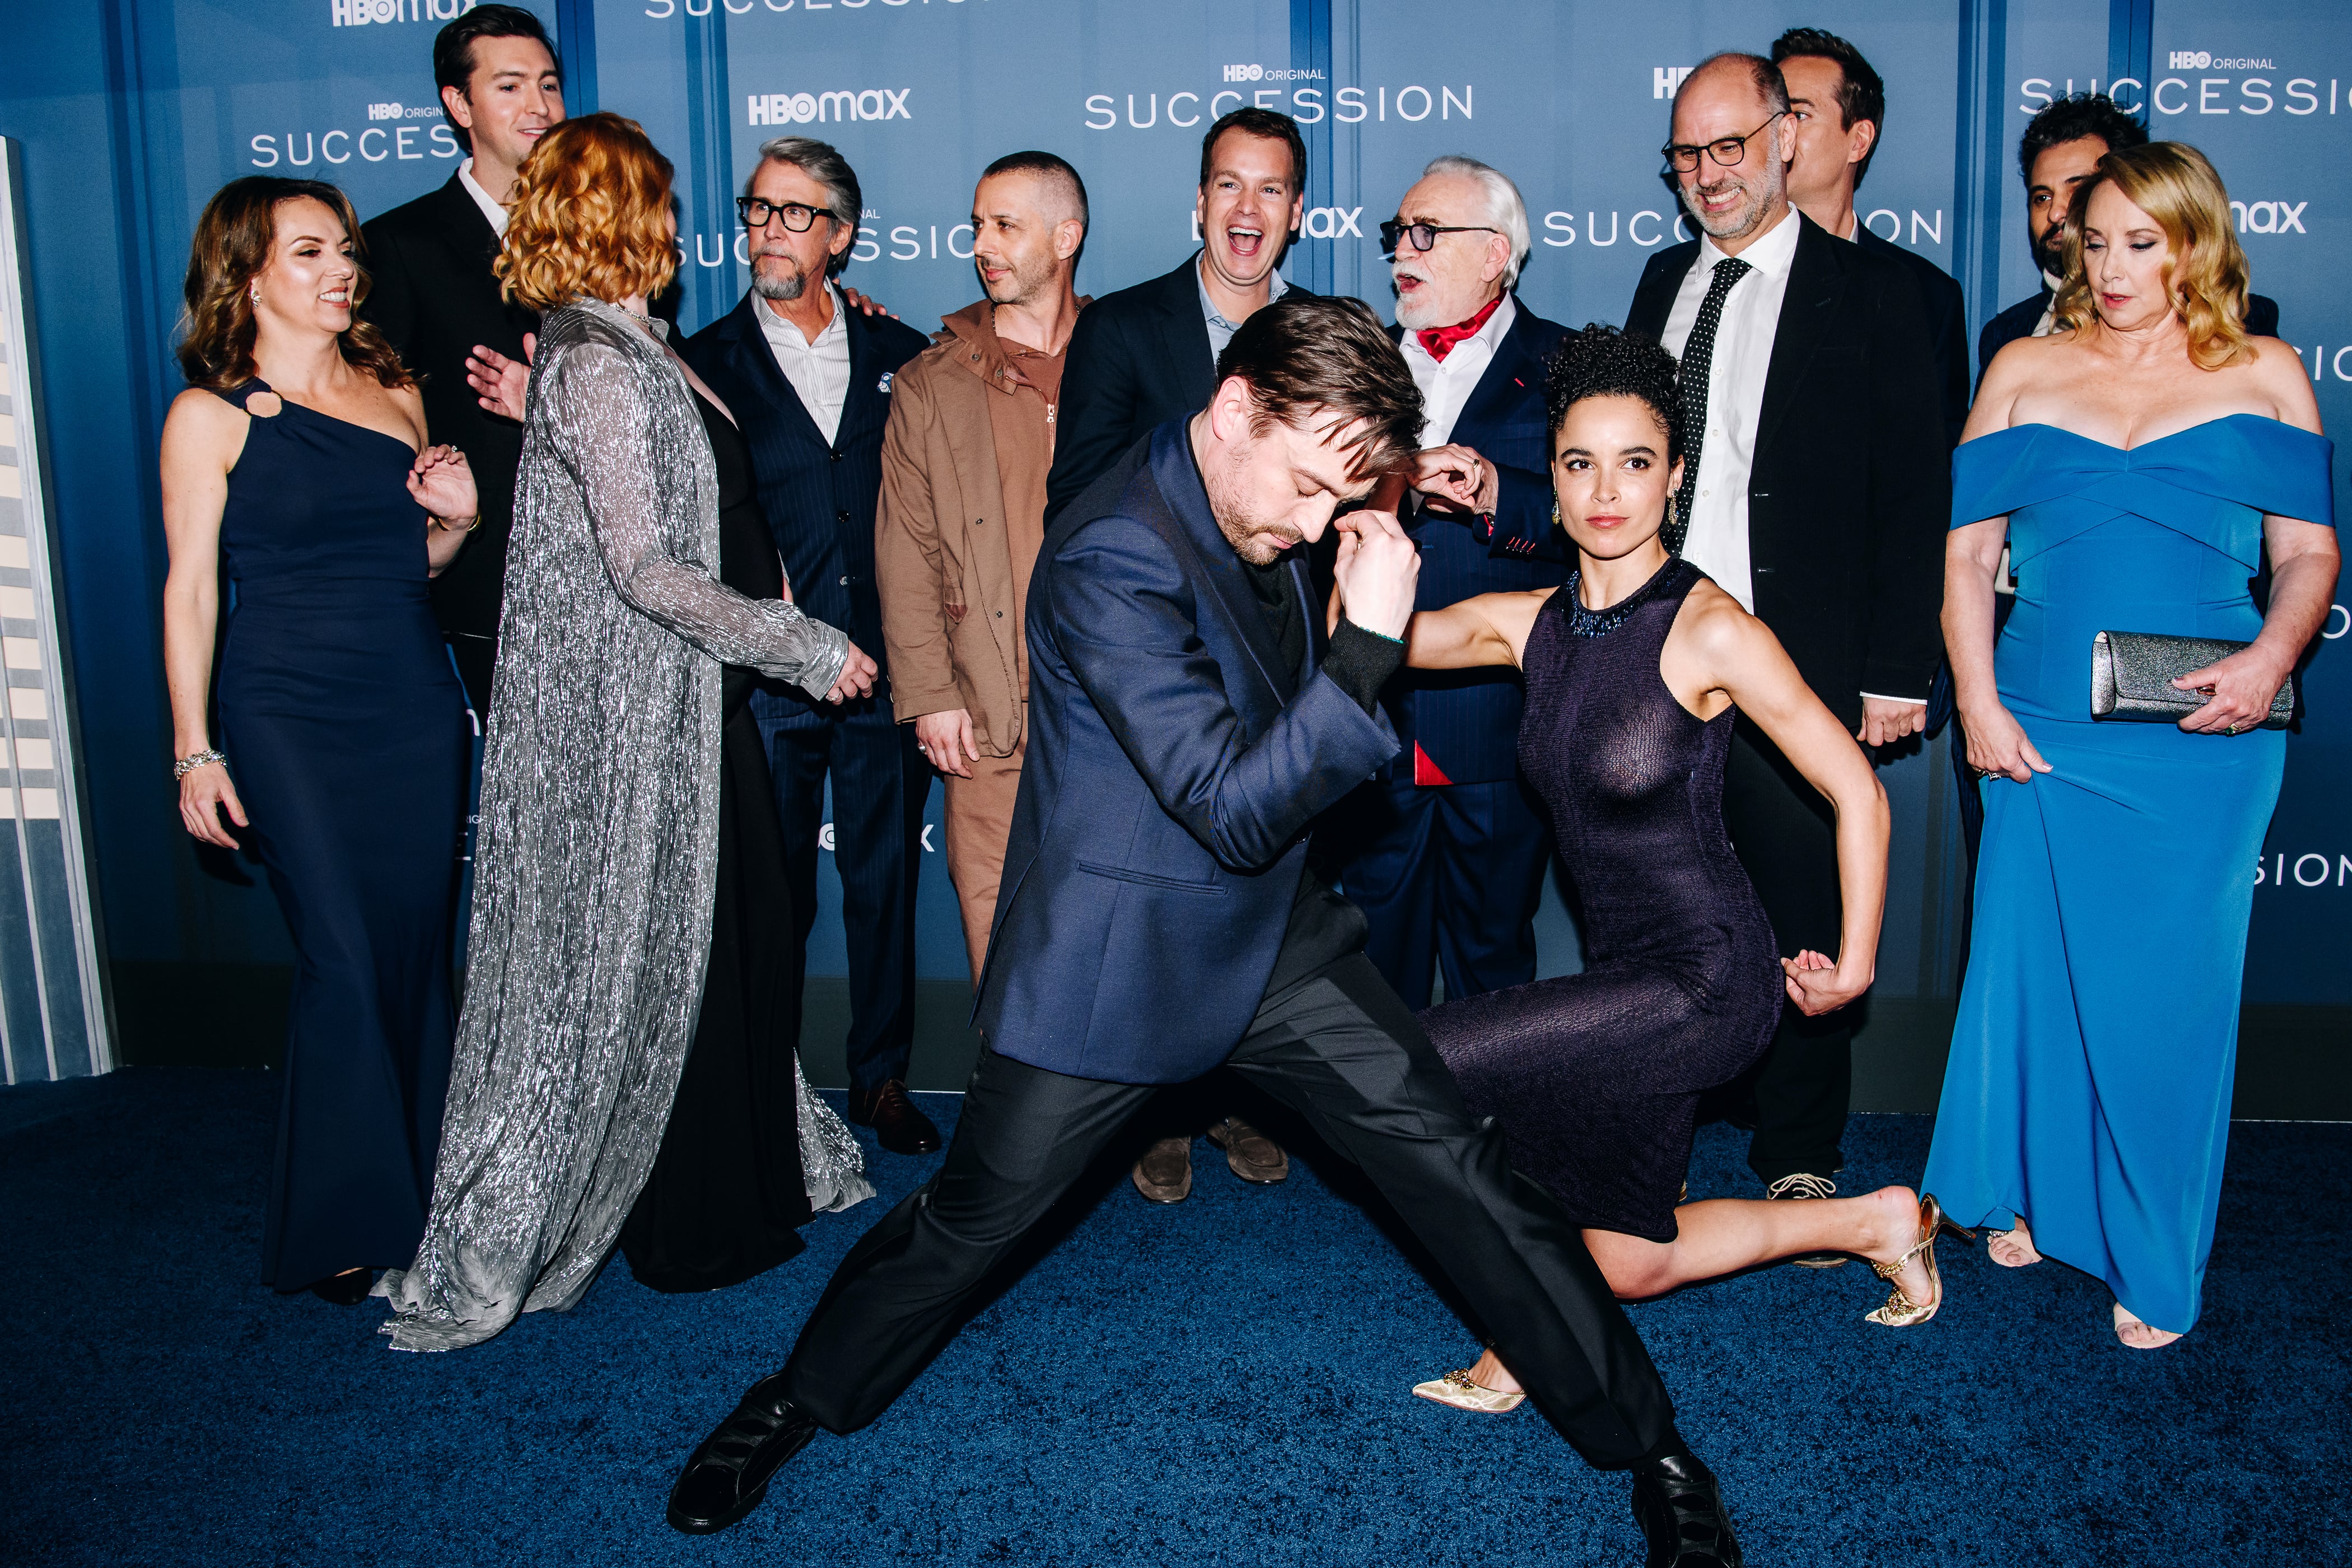 Succession' Season 4 Premiere Red Carpet Arrivals: All the Looks